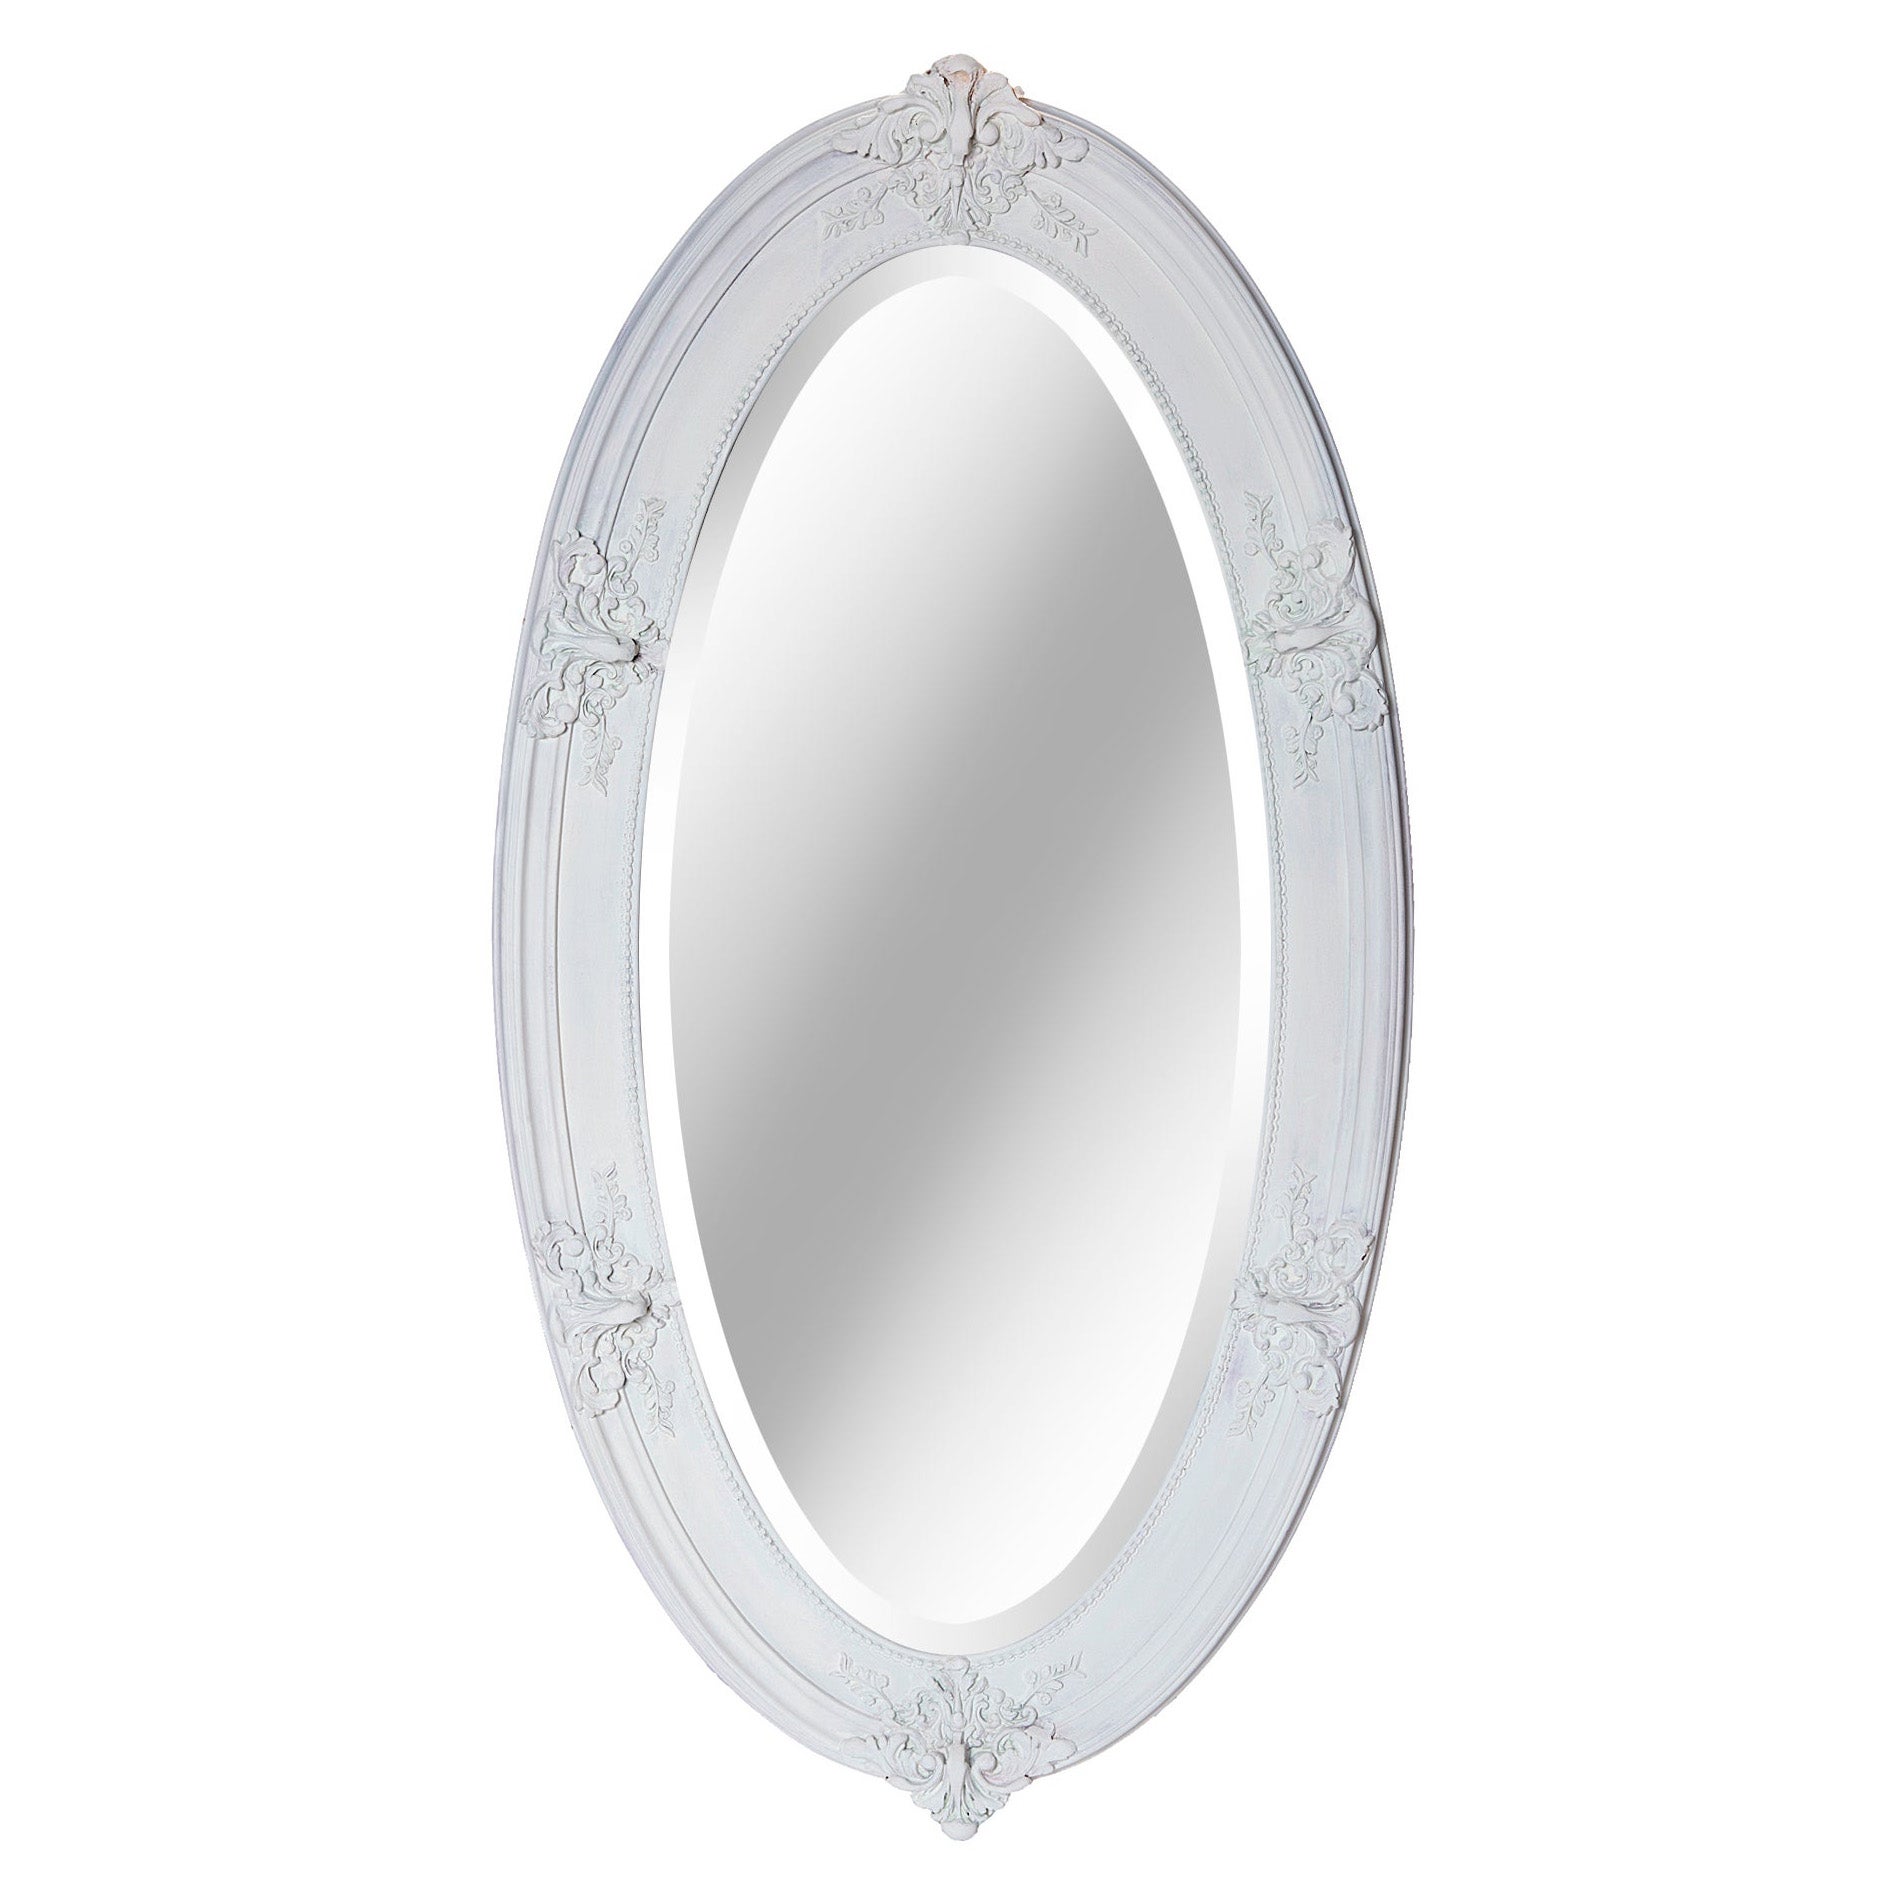 Viktorianischer abgeschrägter ovaler Spiegel